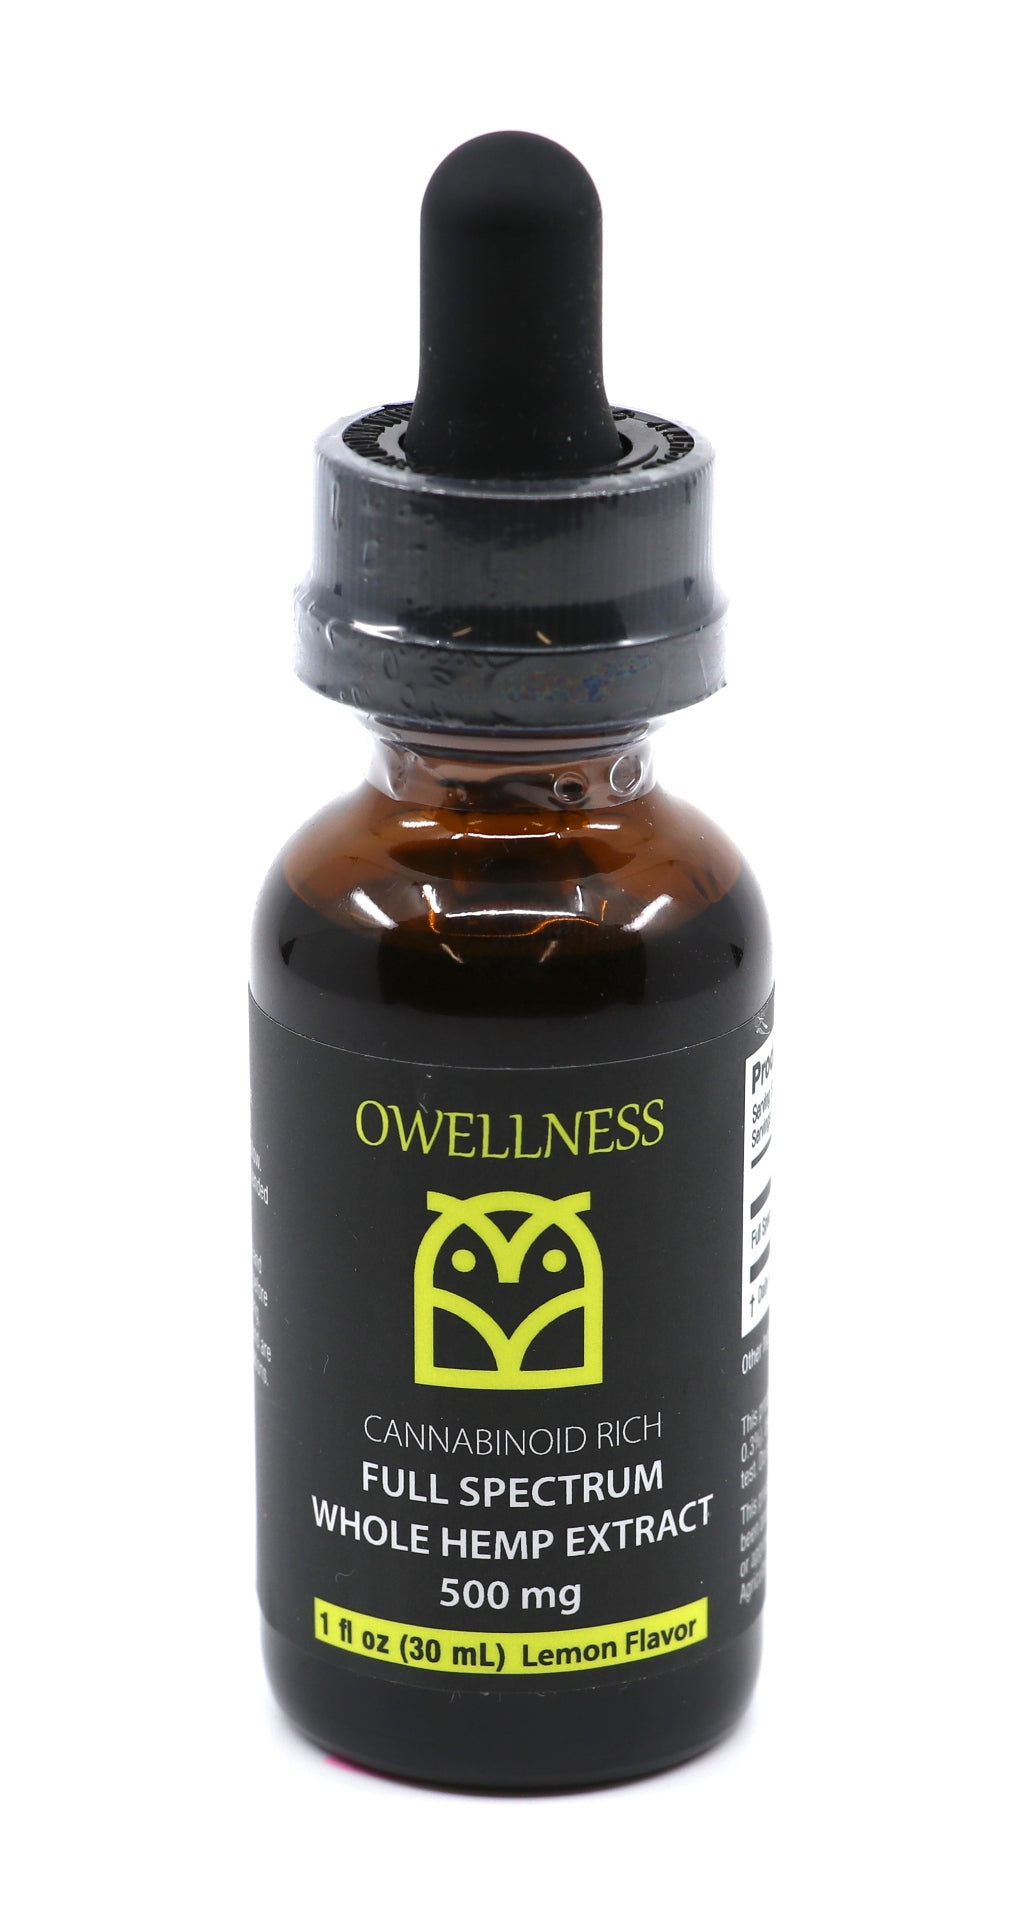 Owellness Full Sprectrum Hemp Oil Extract CBD Tincture Lemon Flavor